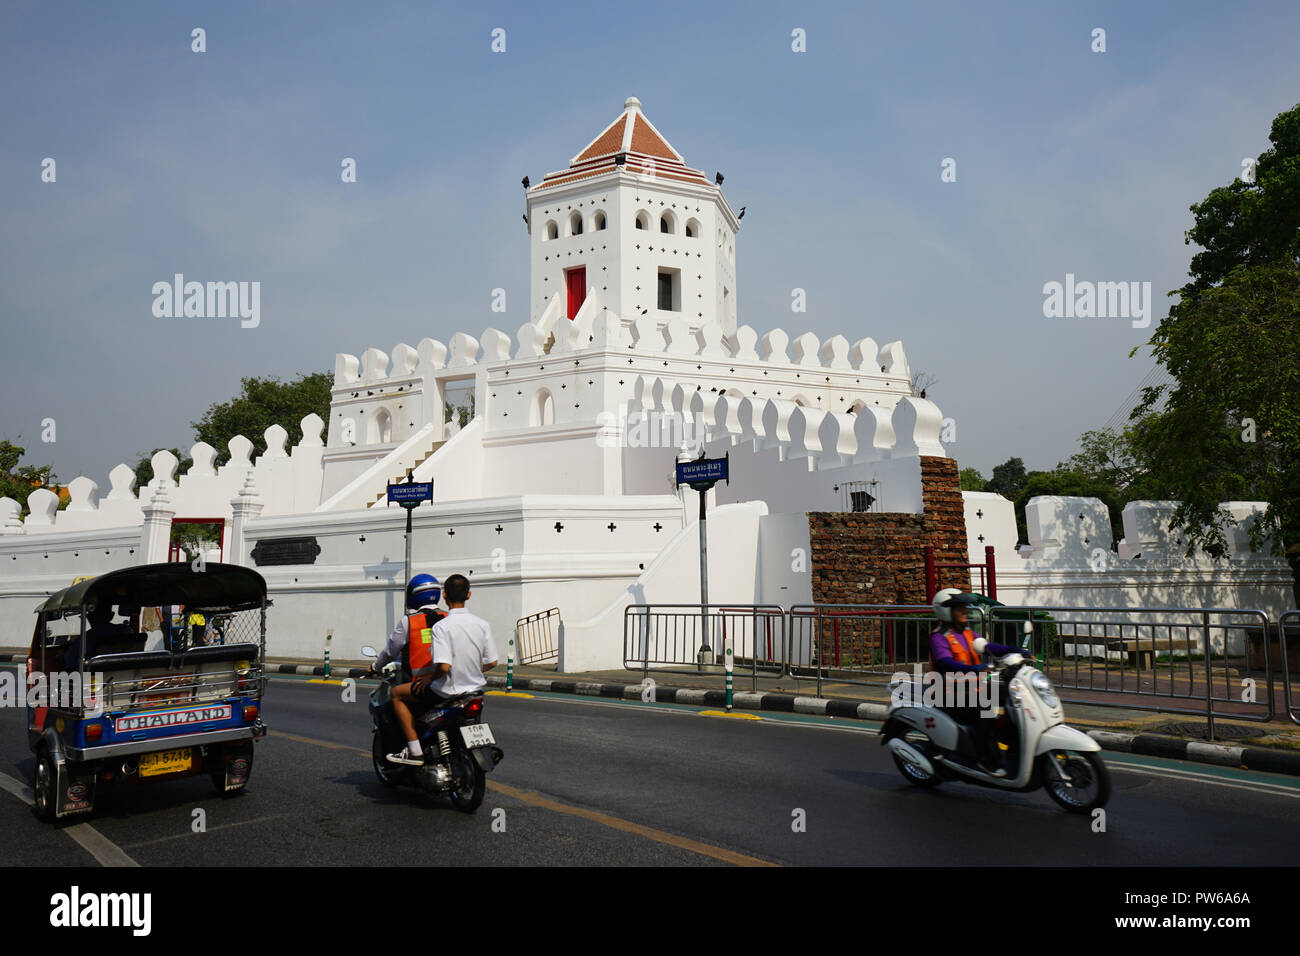 Phra Sumen Fort, Pom Pra Sumen, Phra Nakhon, Bangkok, Thaïlande, Asie Banque D'Images